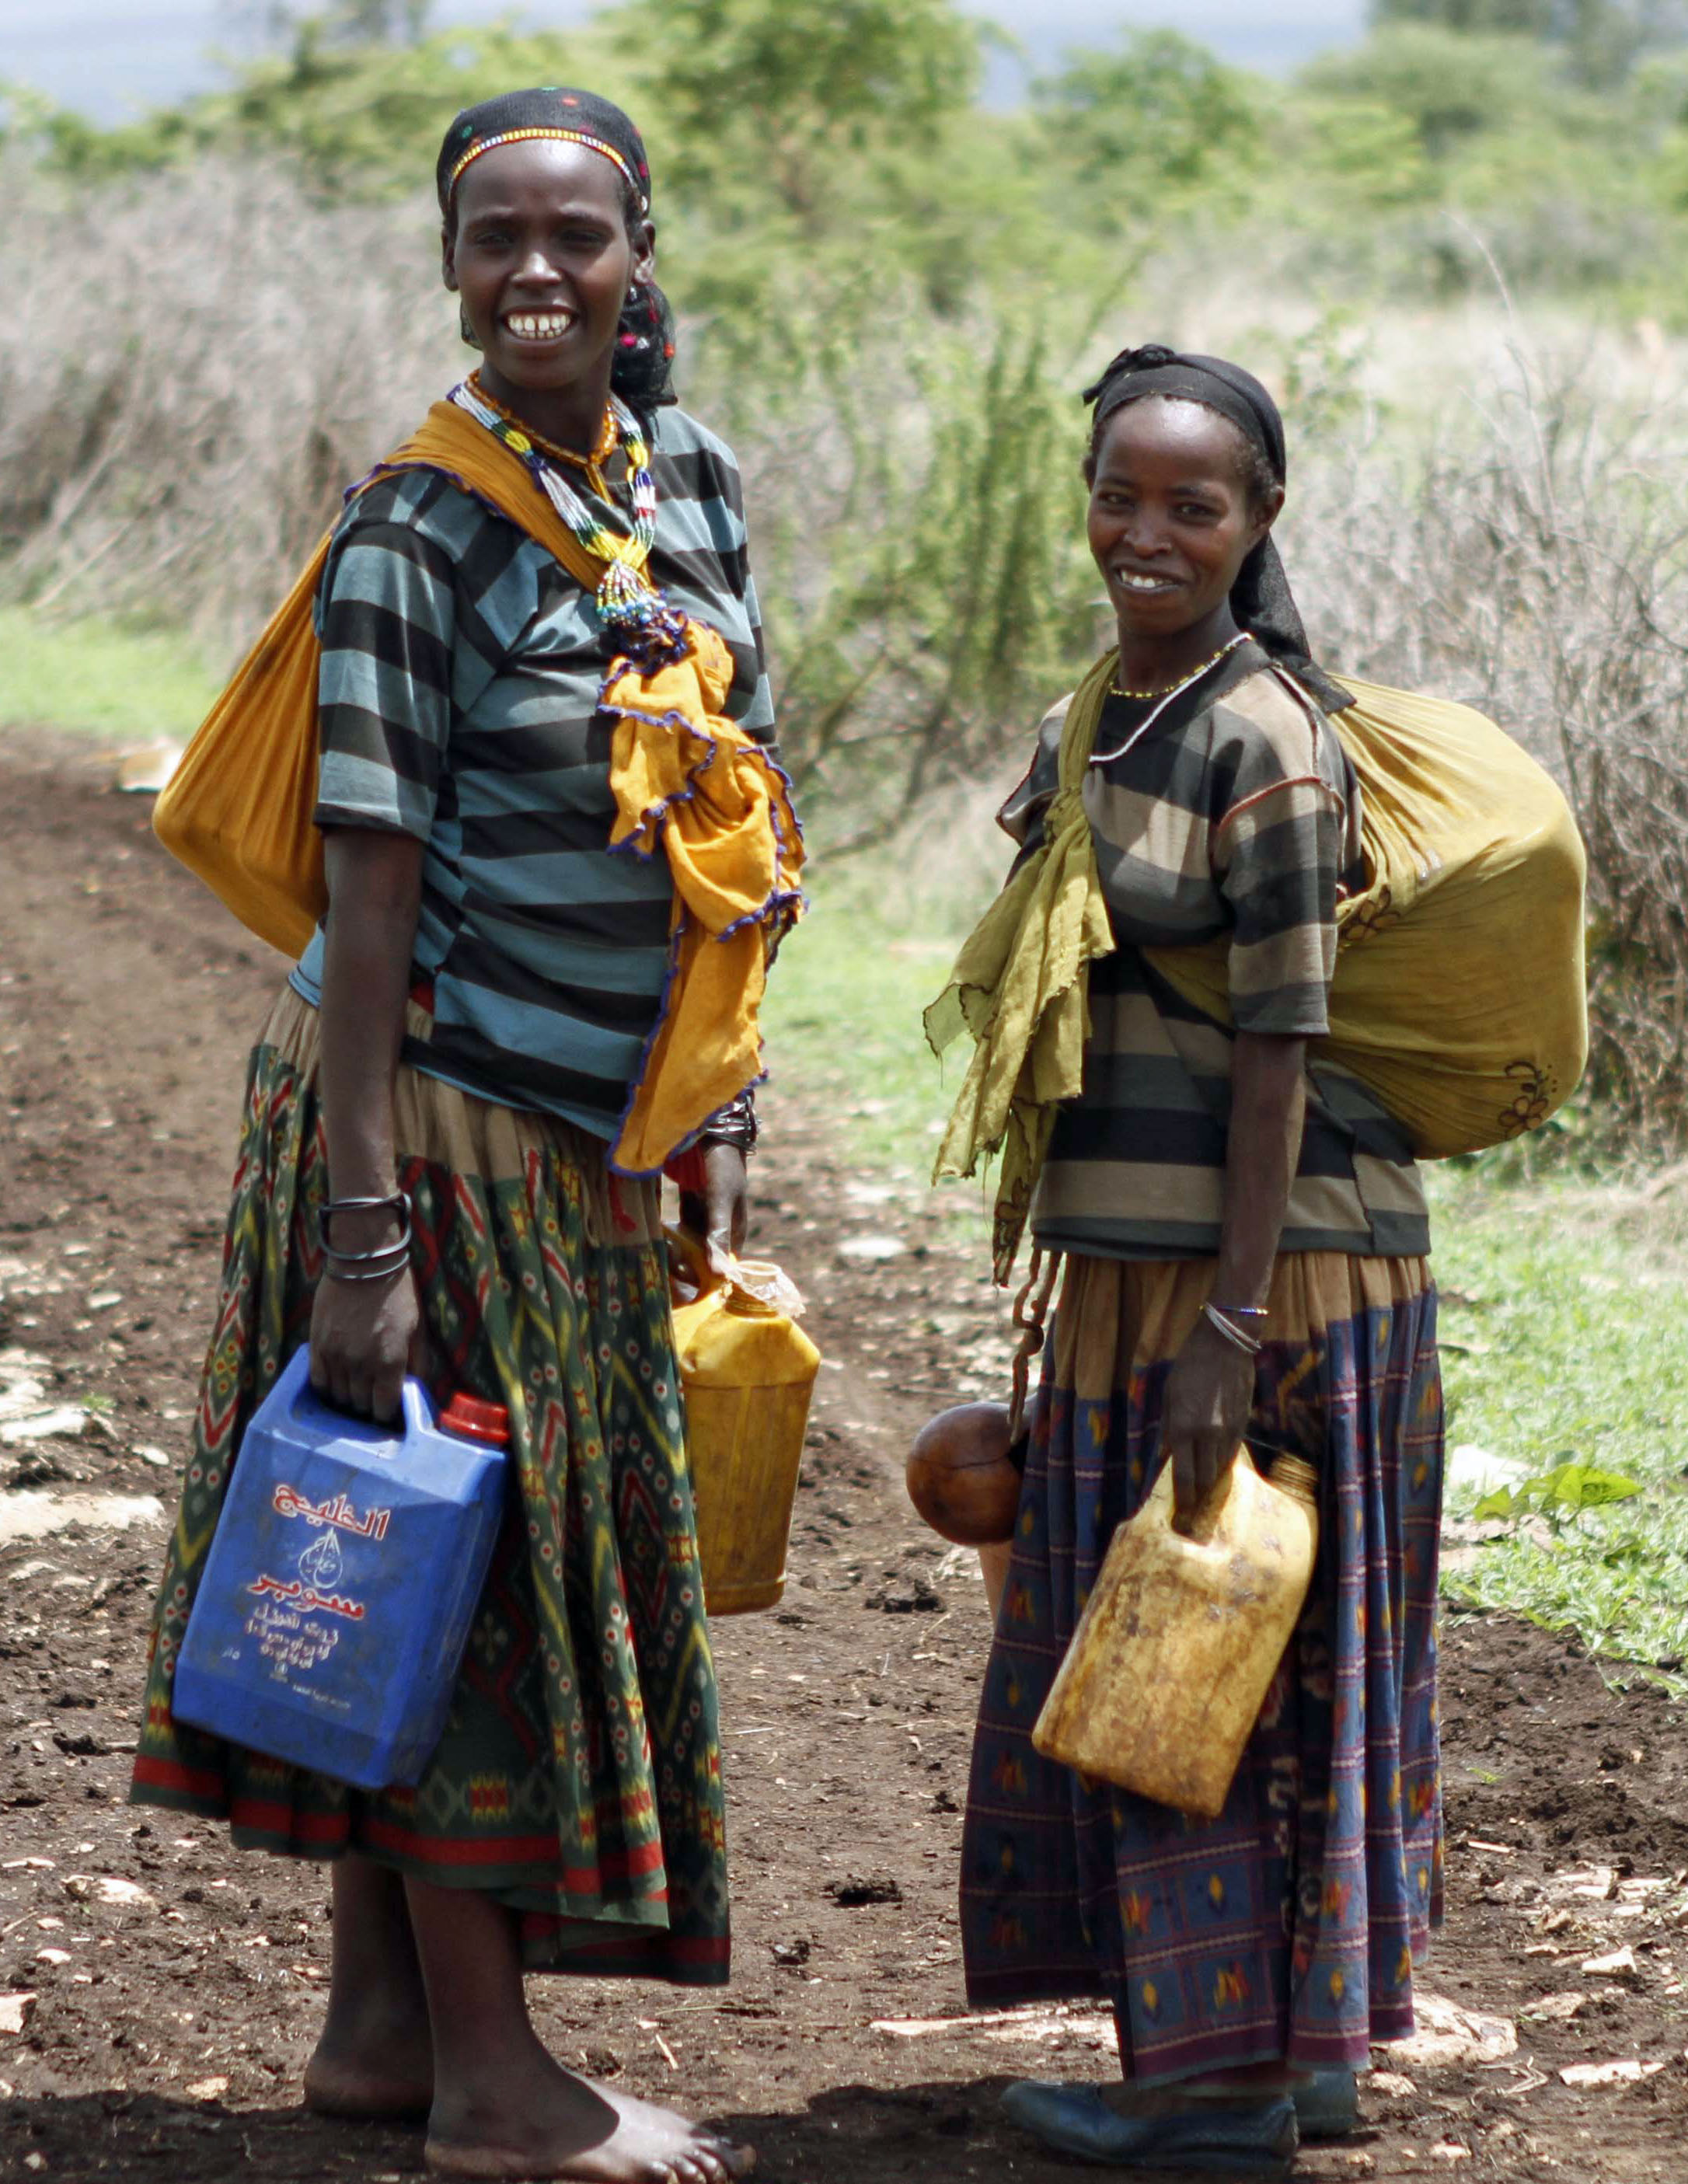 Adolescent girls in Ethiopia fetch water 